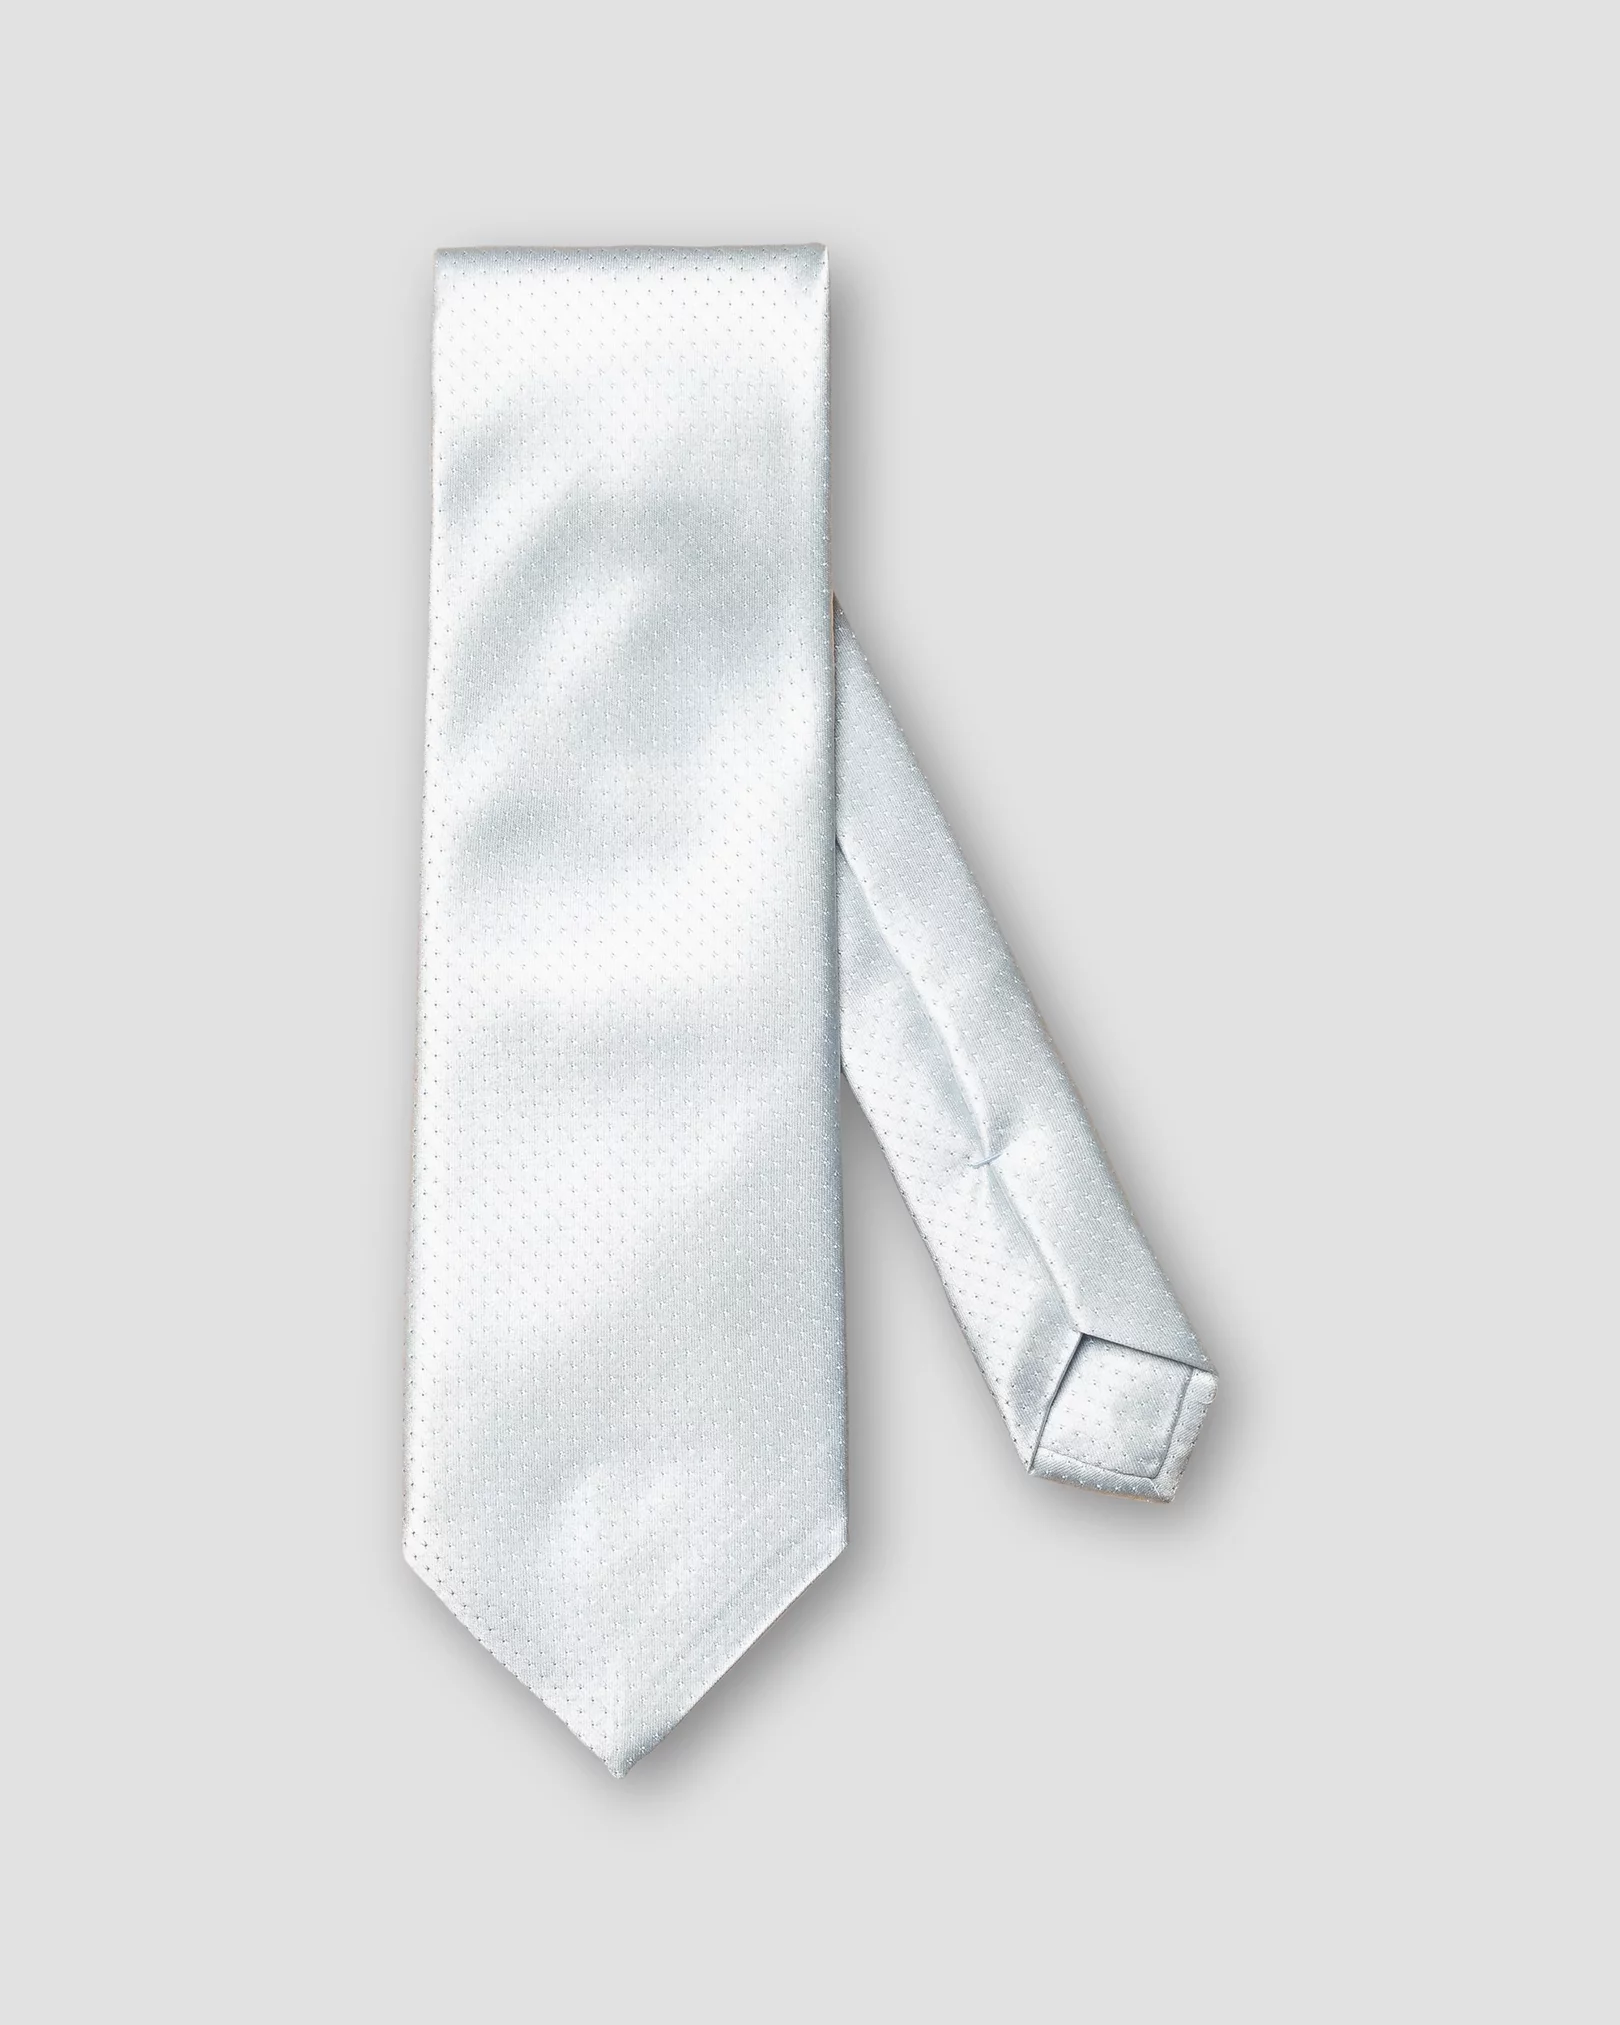 Eton - light blue pin dot tie